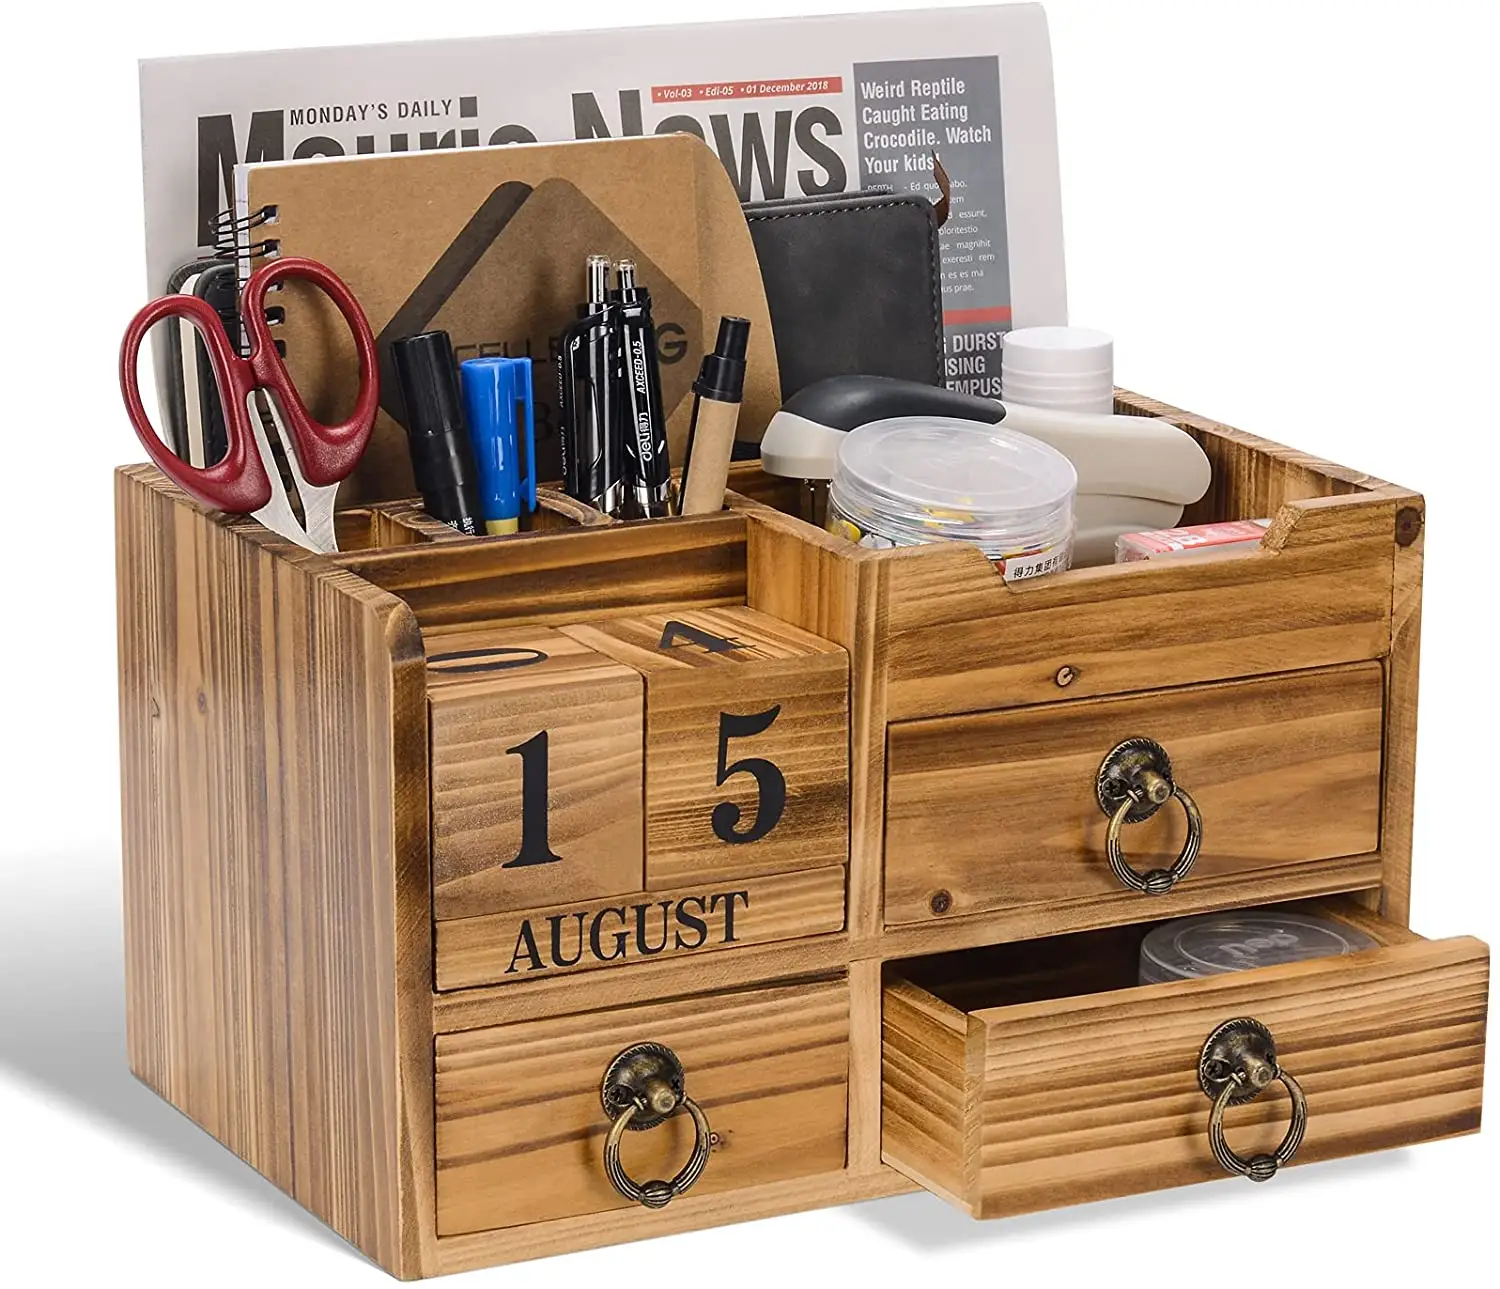 Wooden Office School Rustic Desktop Organizer with 3 drawers wooden hair dryer holder